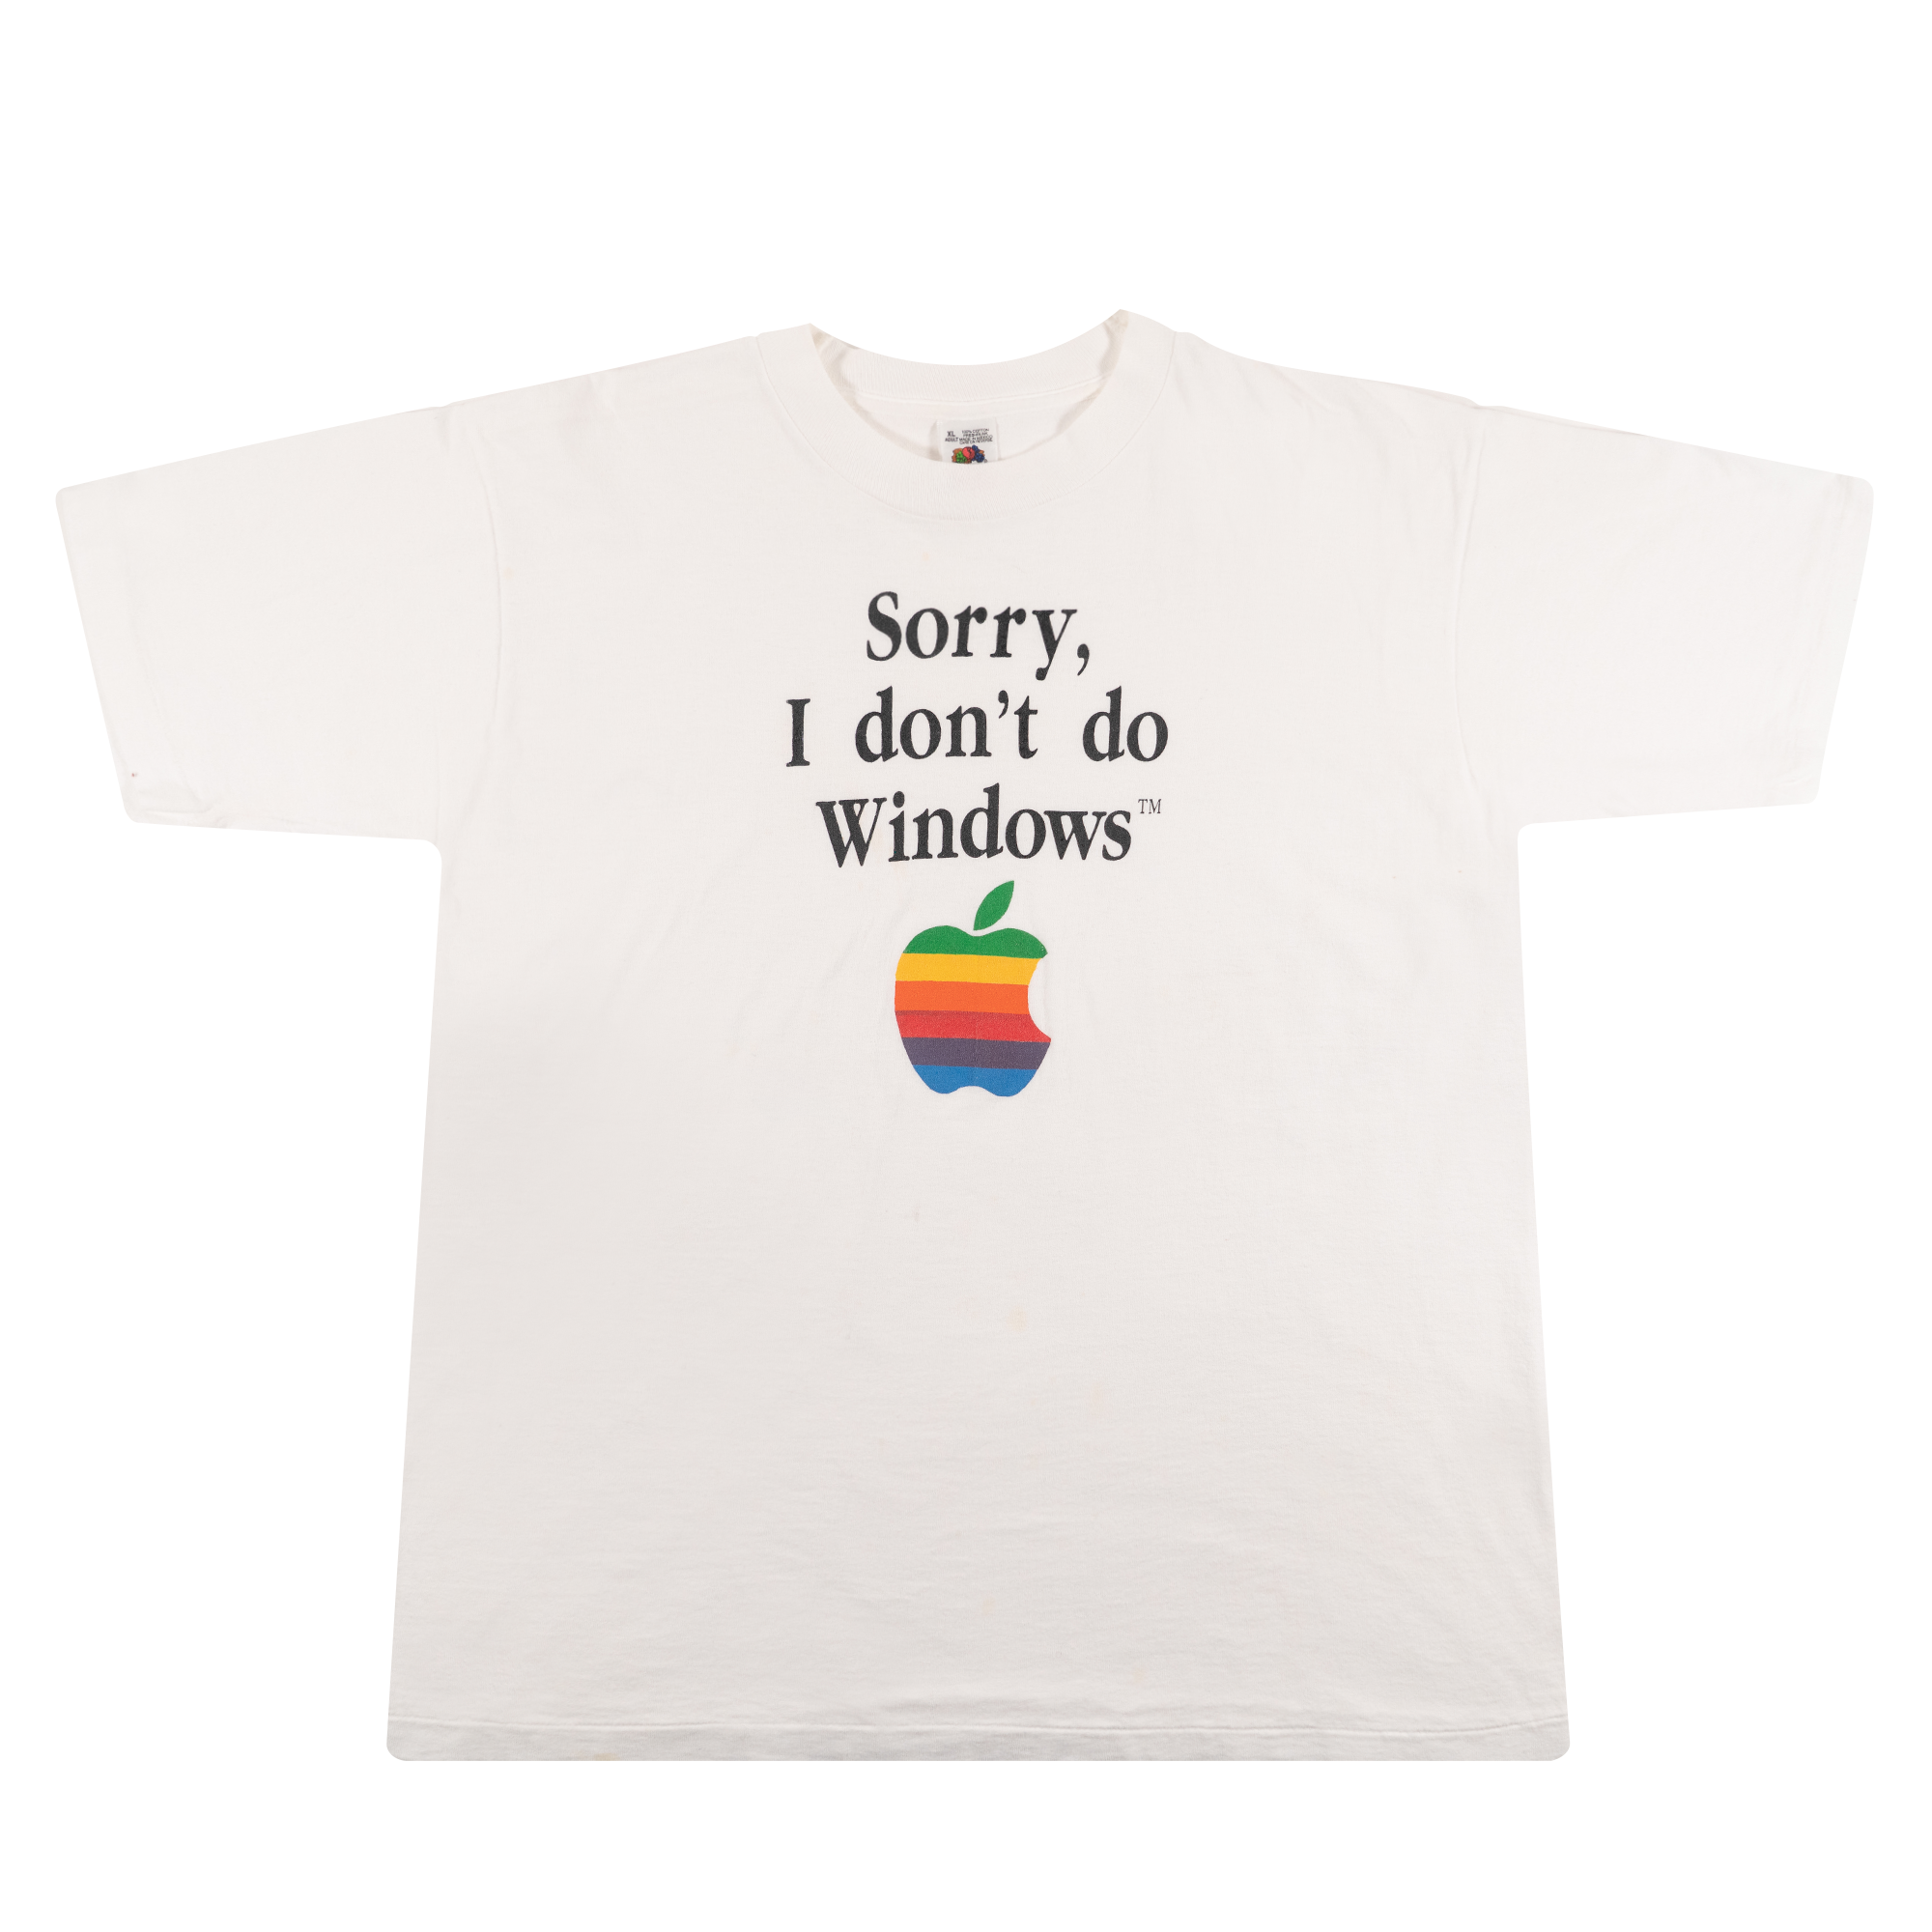 Apple Computers “Sorry I don’t do Windows” Tee White-PLUS